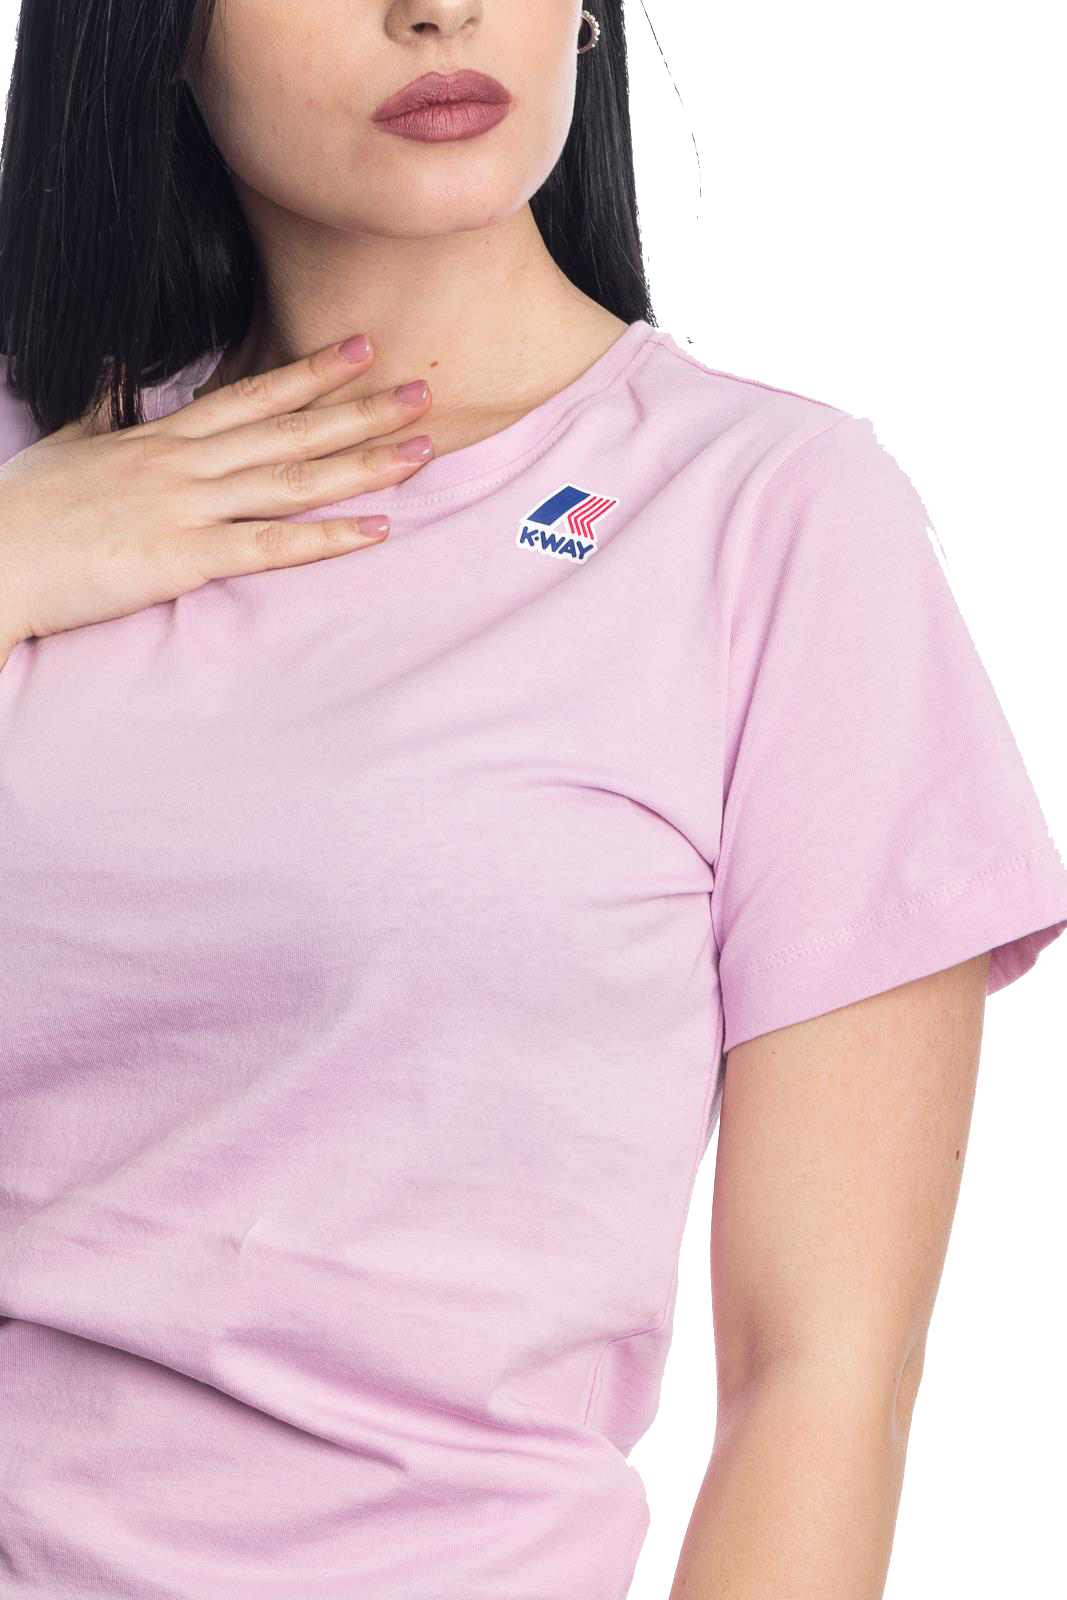 LE VRAI EDOUARD - T-Shirt上衣 - T-Shirt - 中性 - 粉色